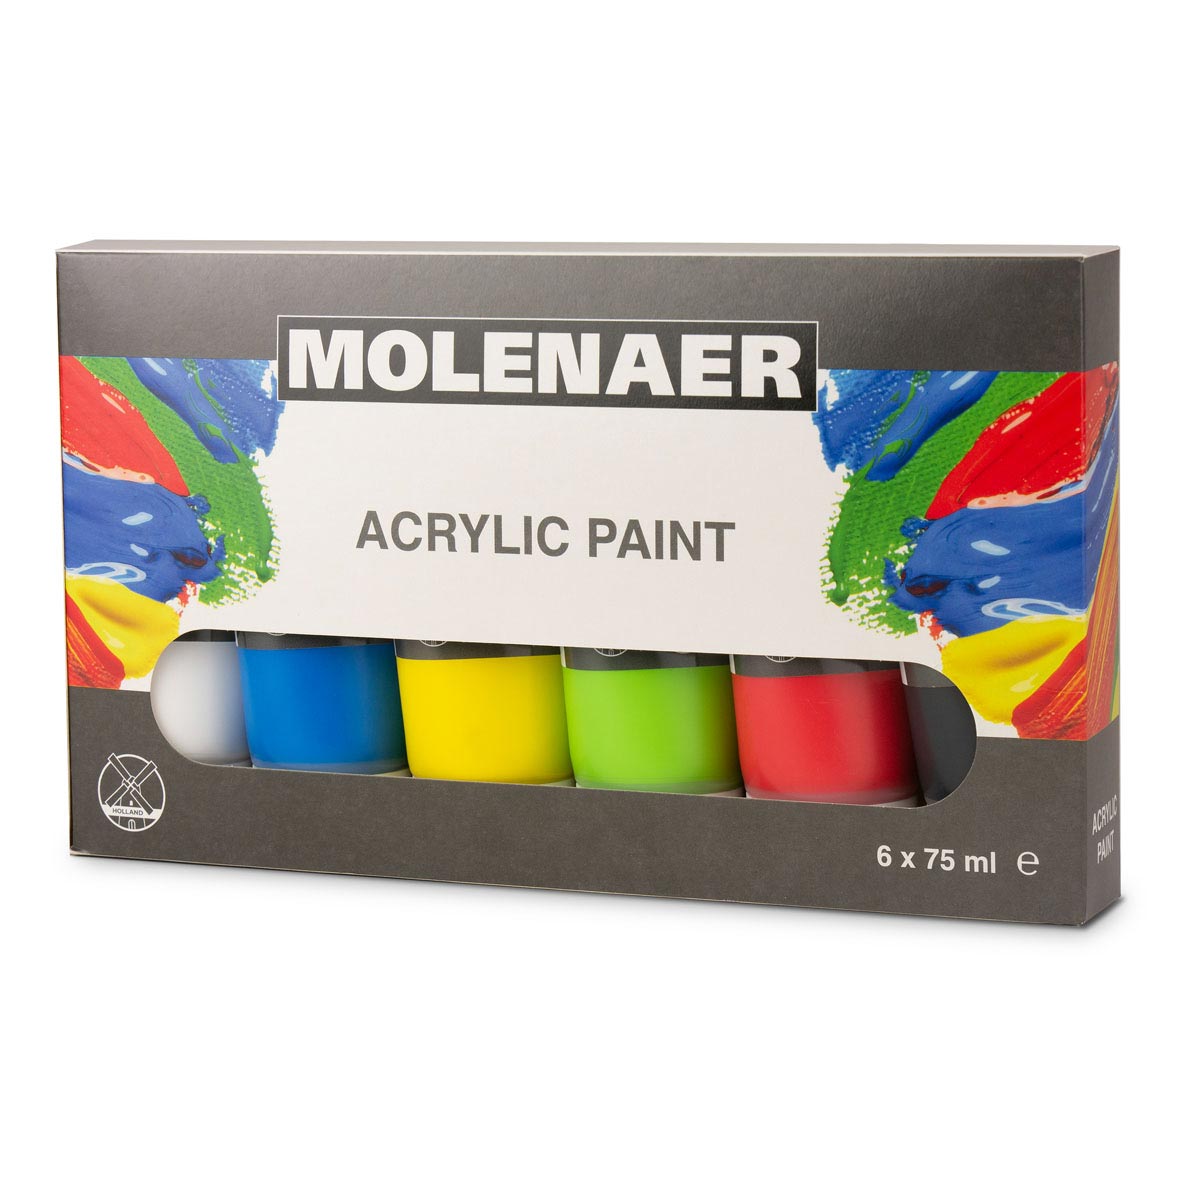 Molenaer Acrylfarbe, 6x75ml